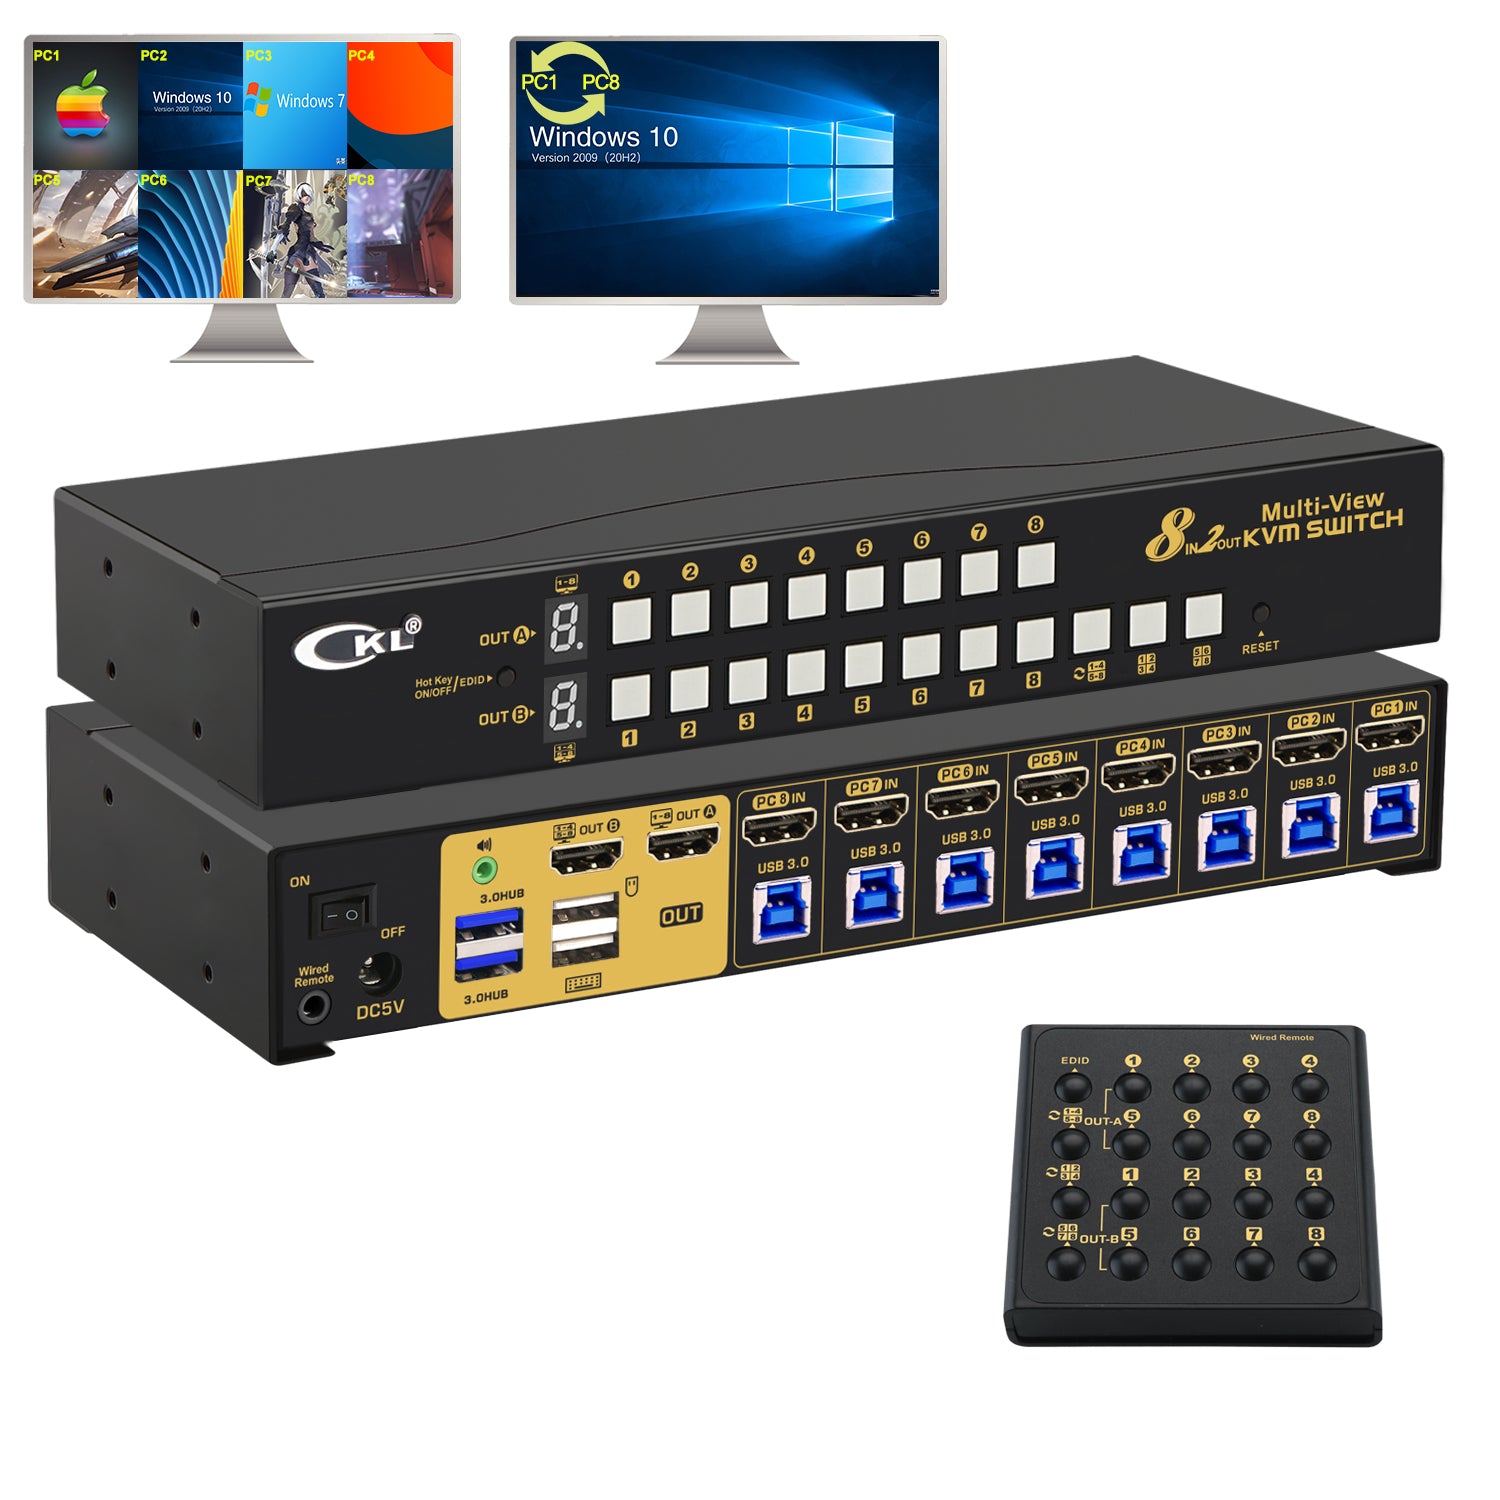 CKL 8x2 Multi-View HDMI Split KVM Switch Dual Monitor Supports Single-Screen, Quad-Screen, Eight-Screen Modes, Split and PIP Function, Sync, Through-Screen, EDID, 4K30Hz, Hotkey Switching (CKL-82MVKVM)